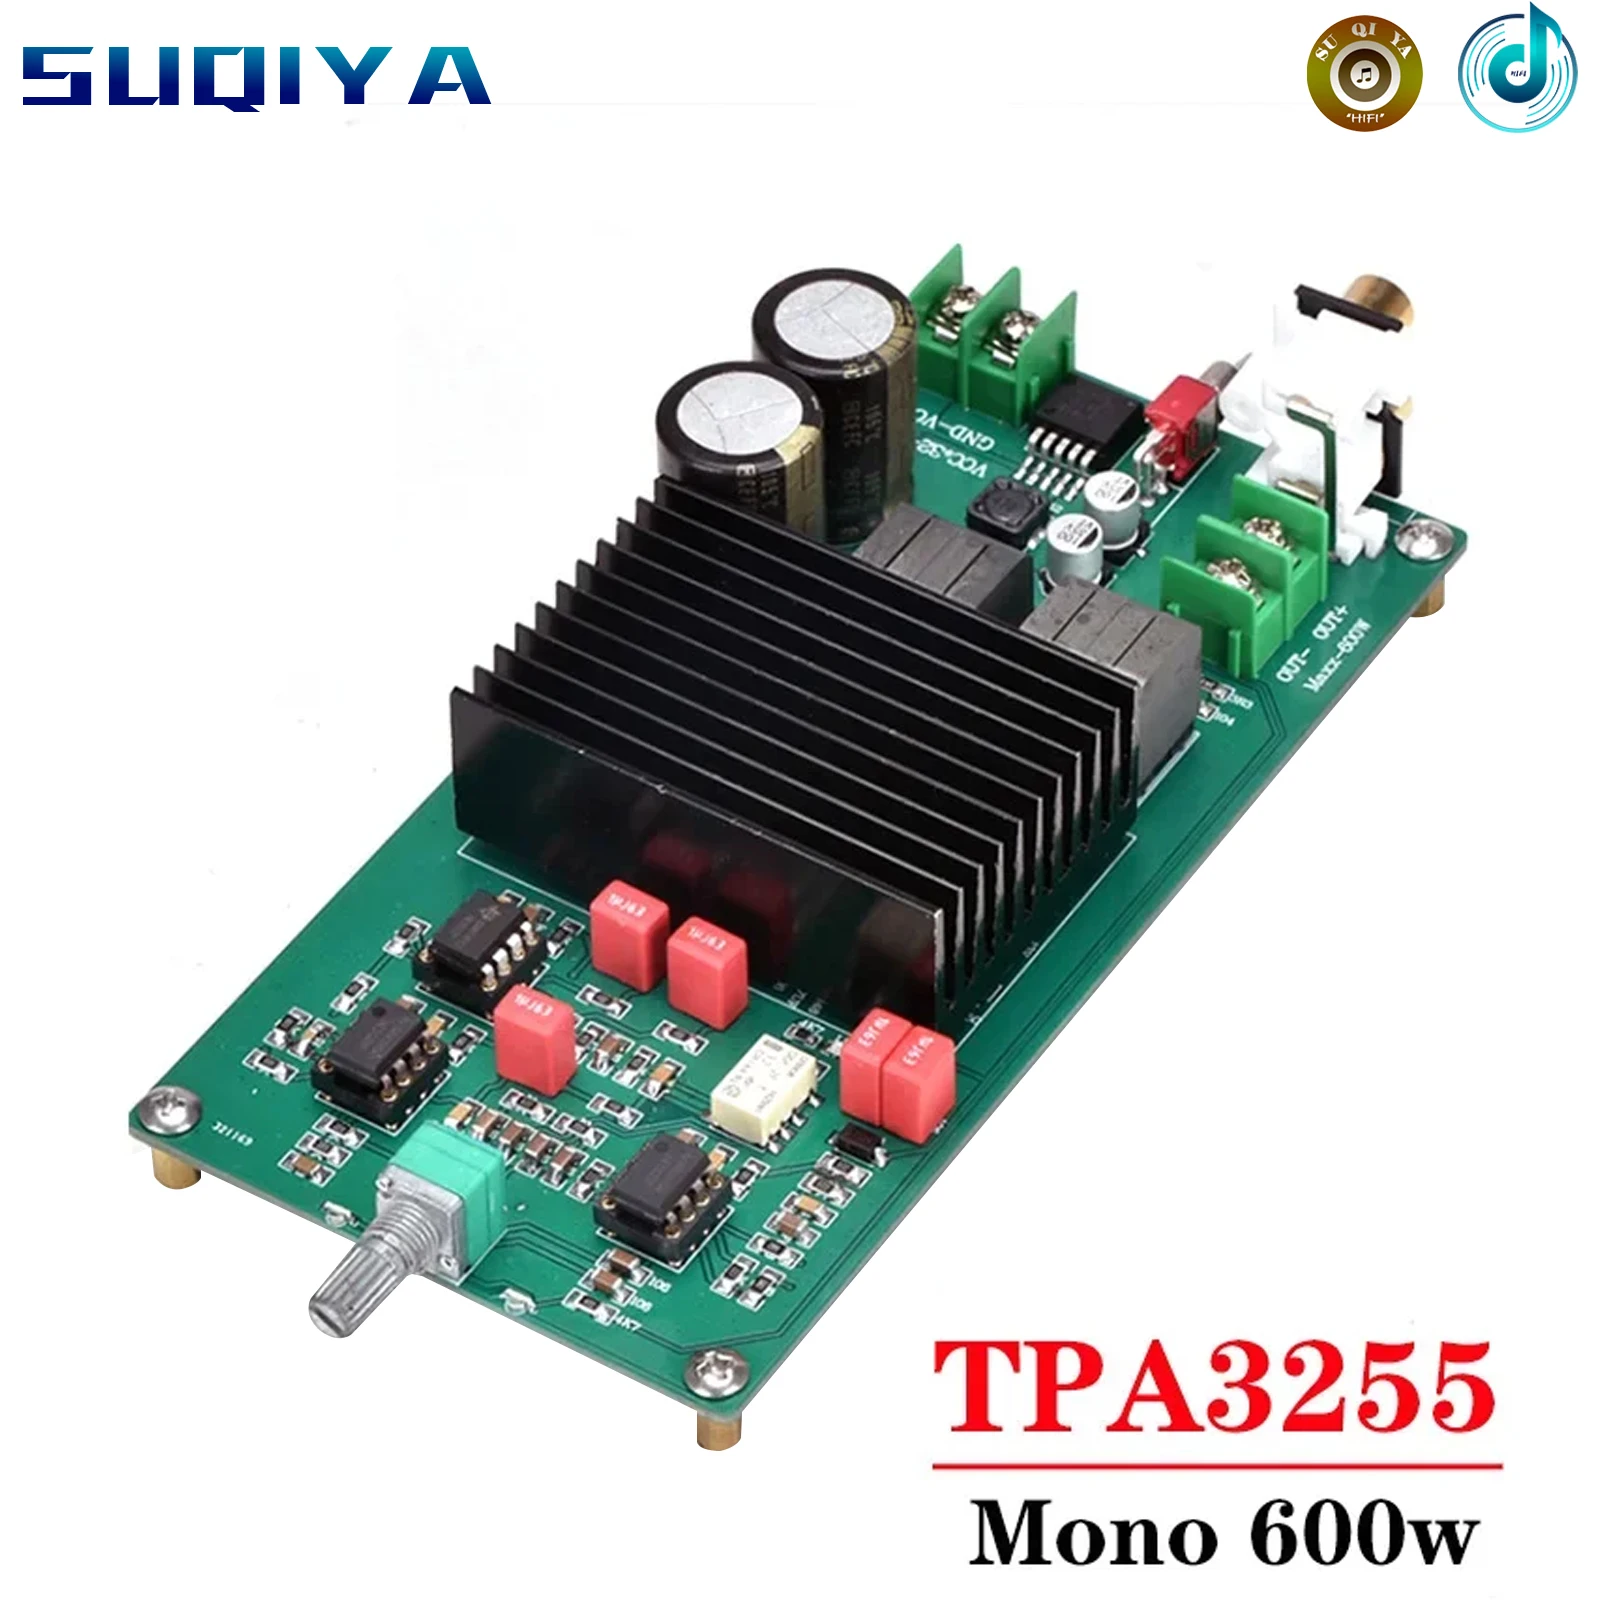 

600w TPA3255 Mono Power Amplifier Board High Power Subwoofer Amp Full Frequency HIFI Digital Class D Audio Amplifier Board